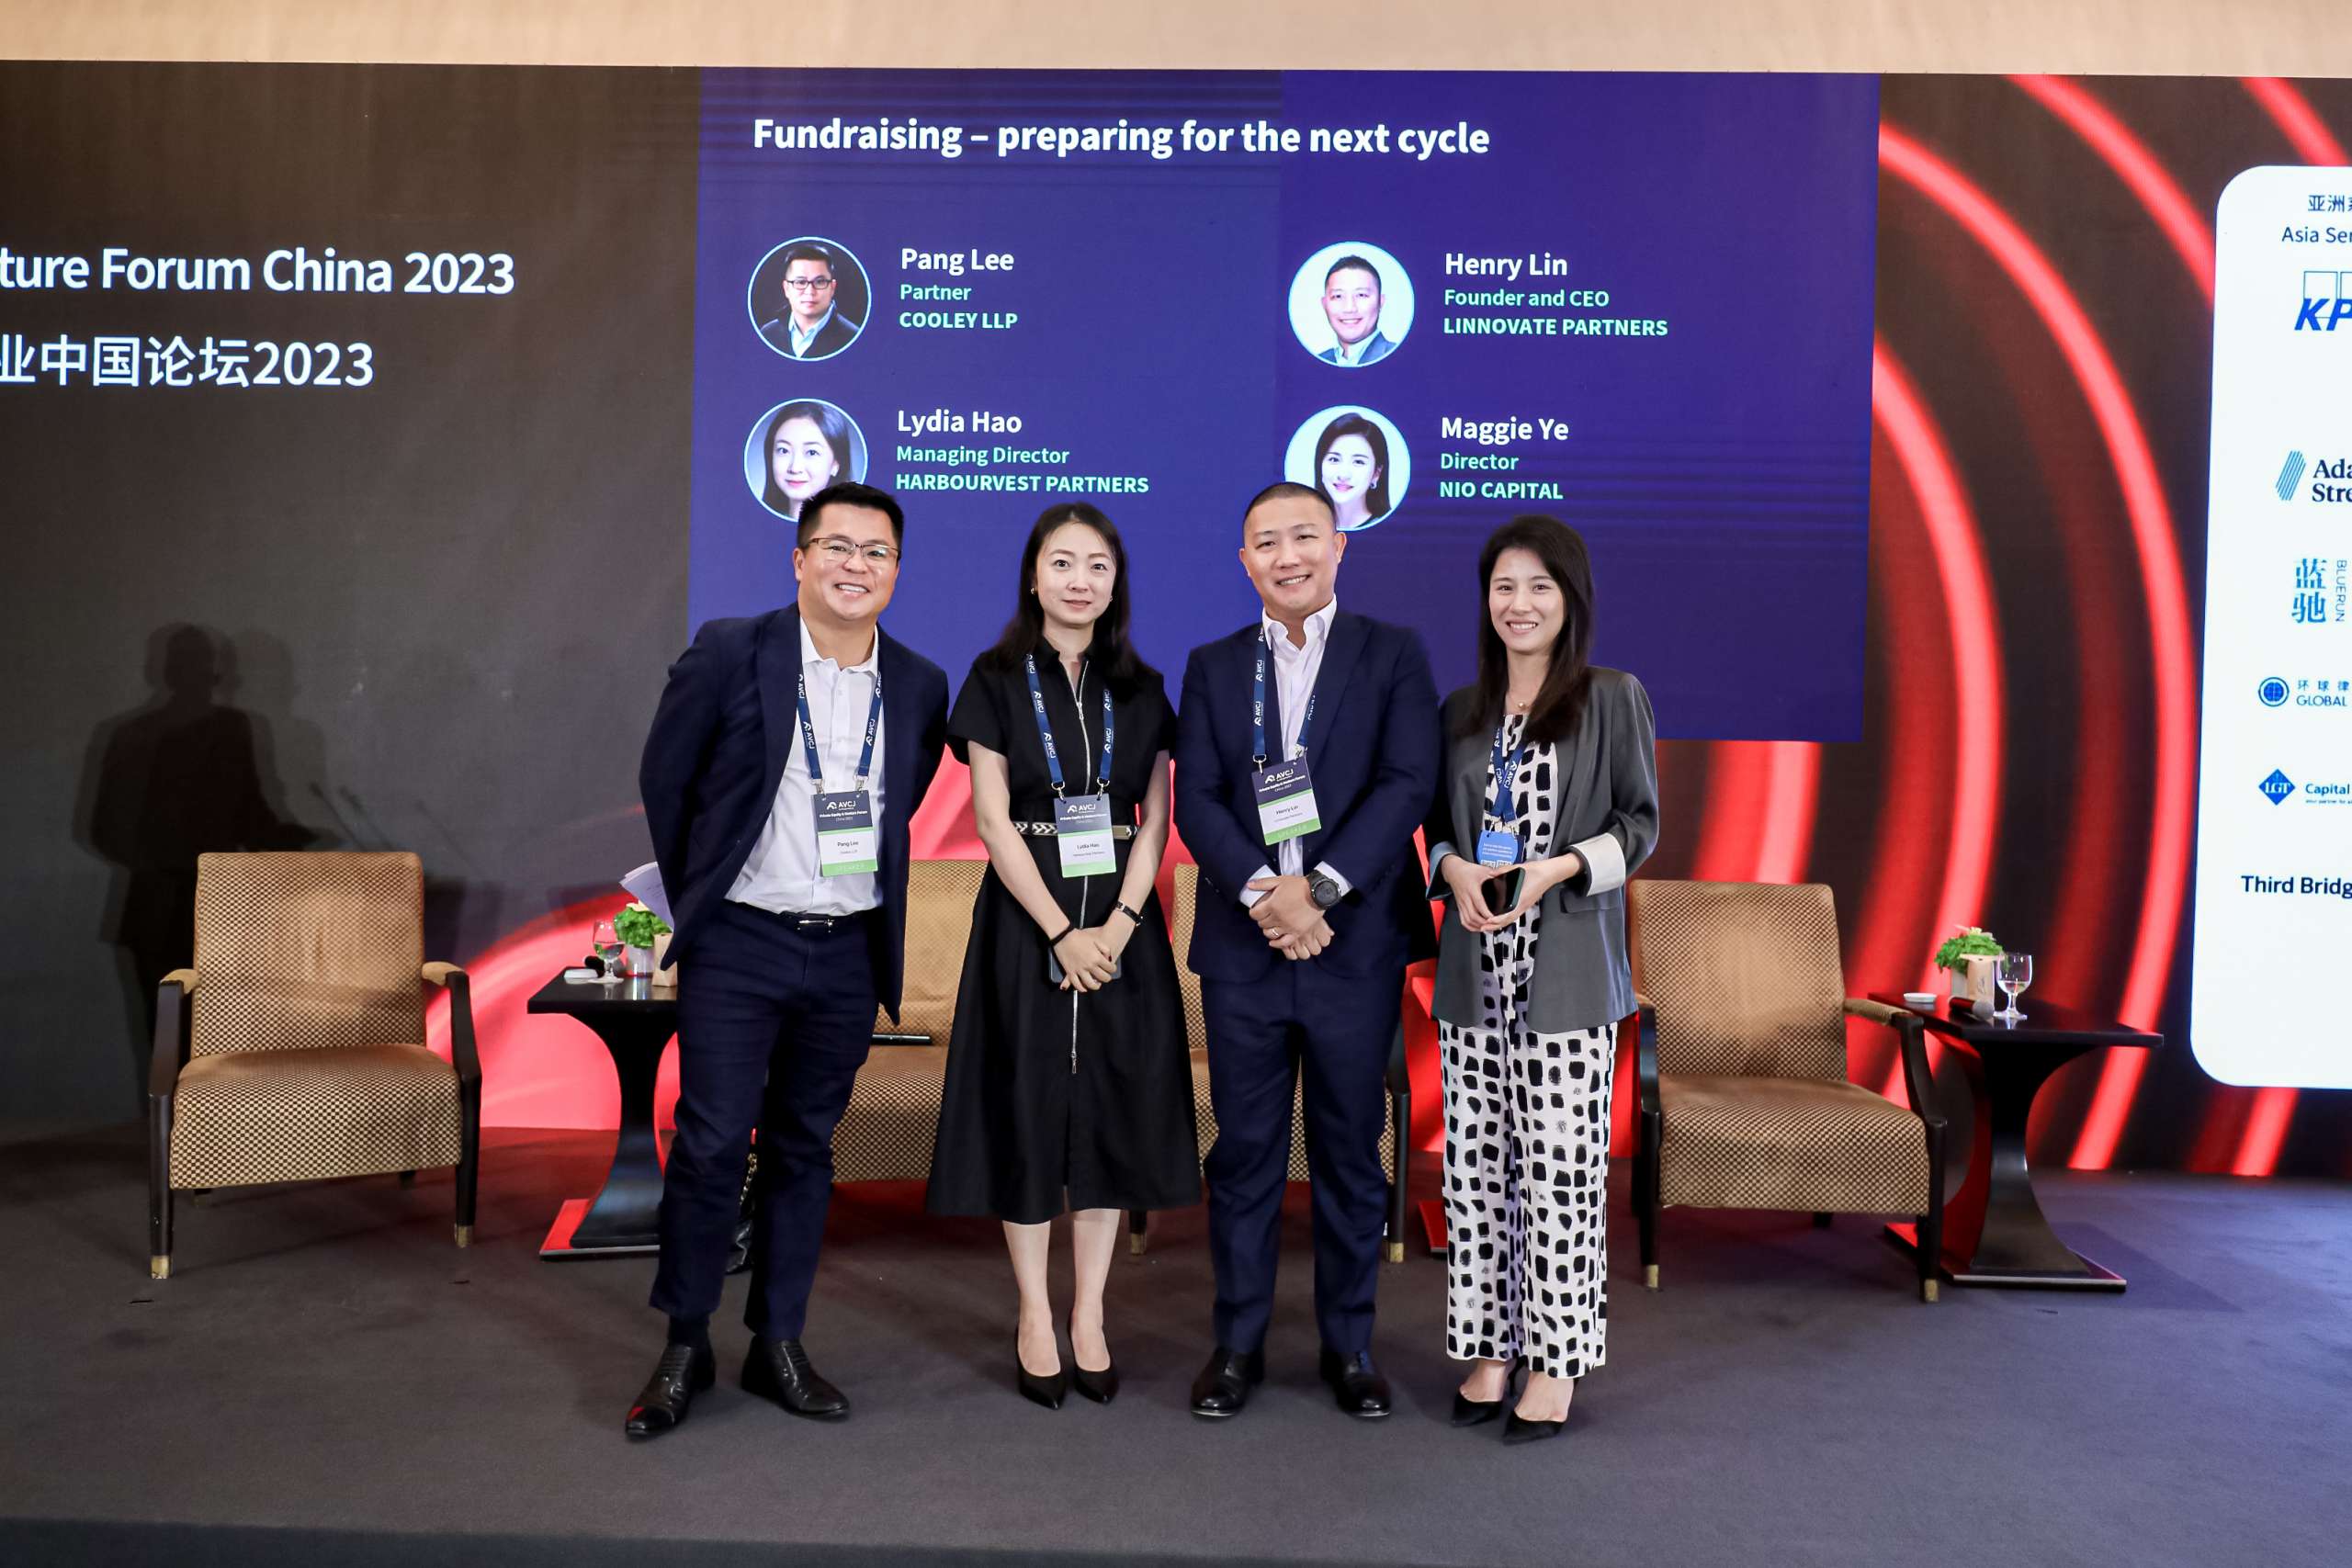 Linnovate Partners Emerged as a Sponsor at AVCJ China 2023